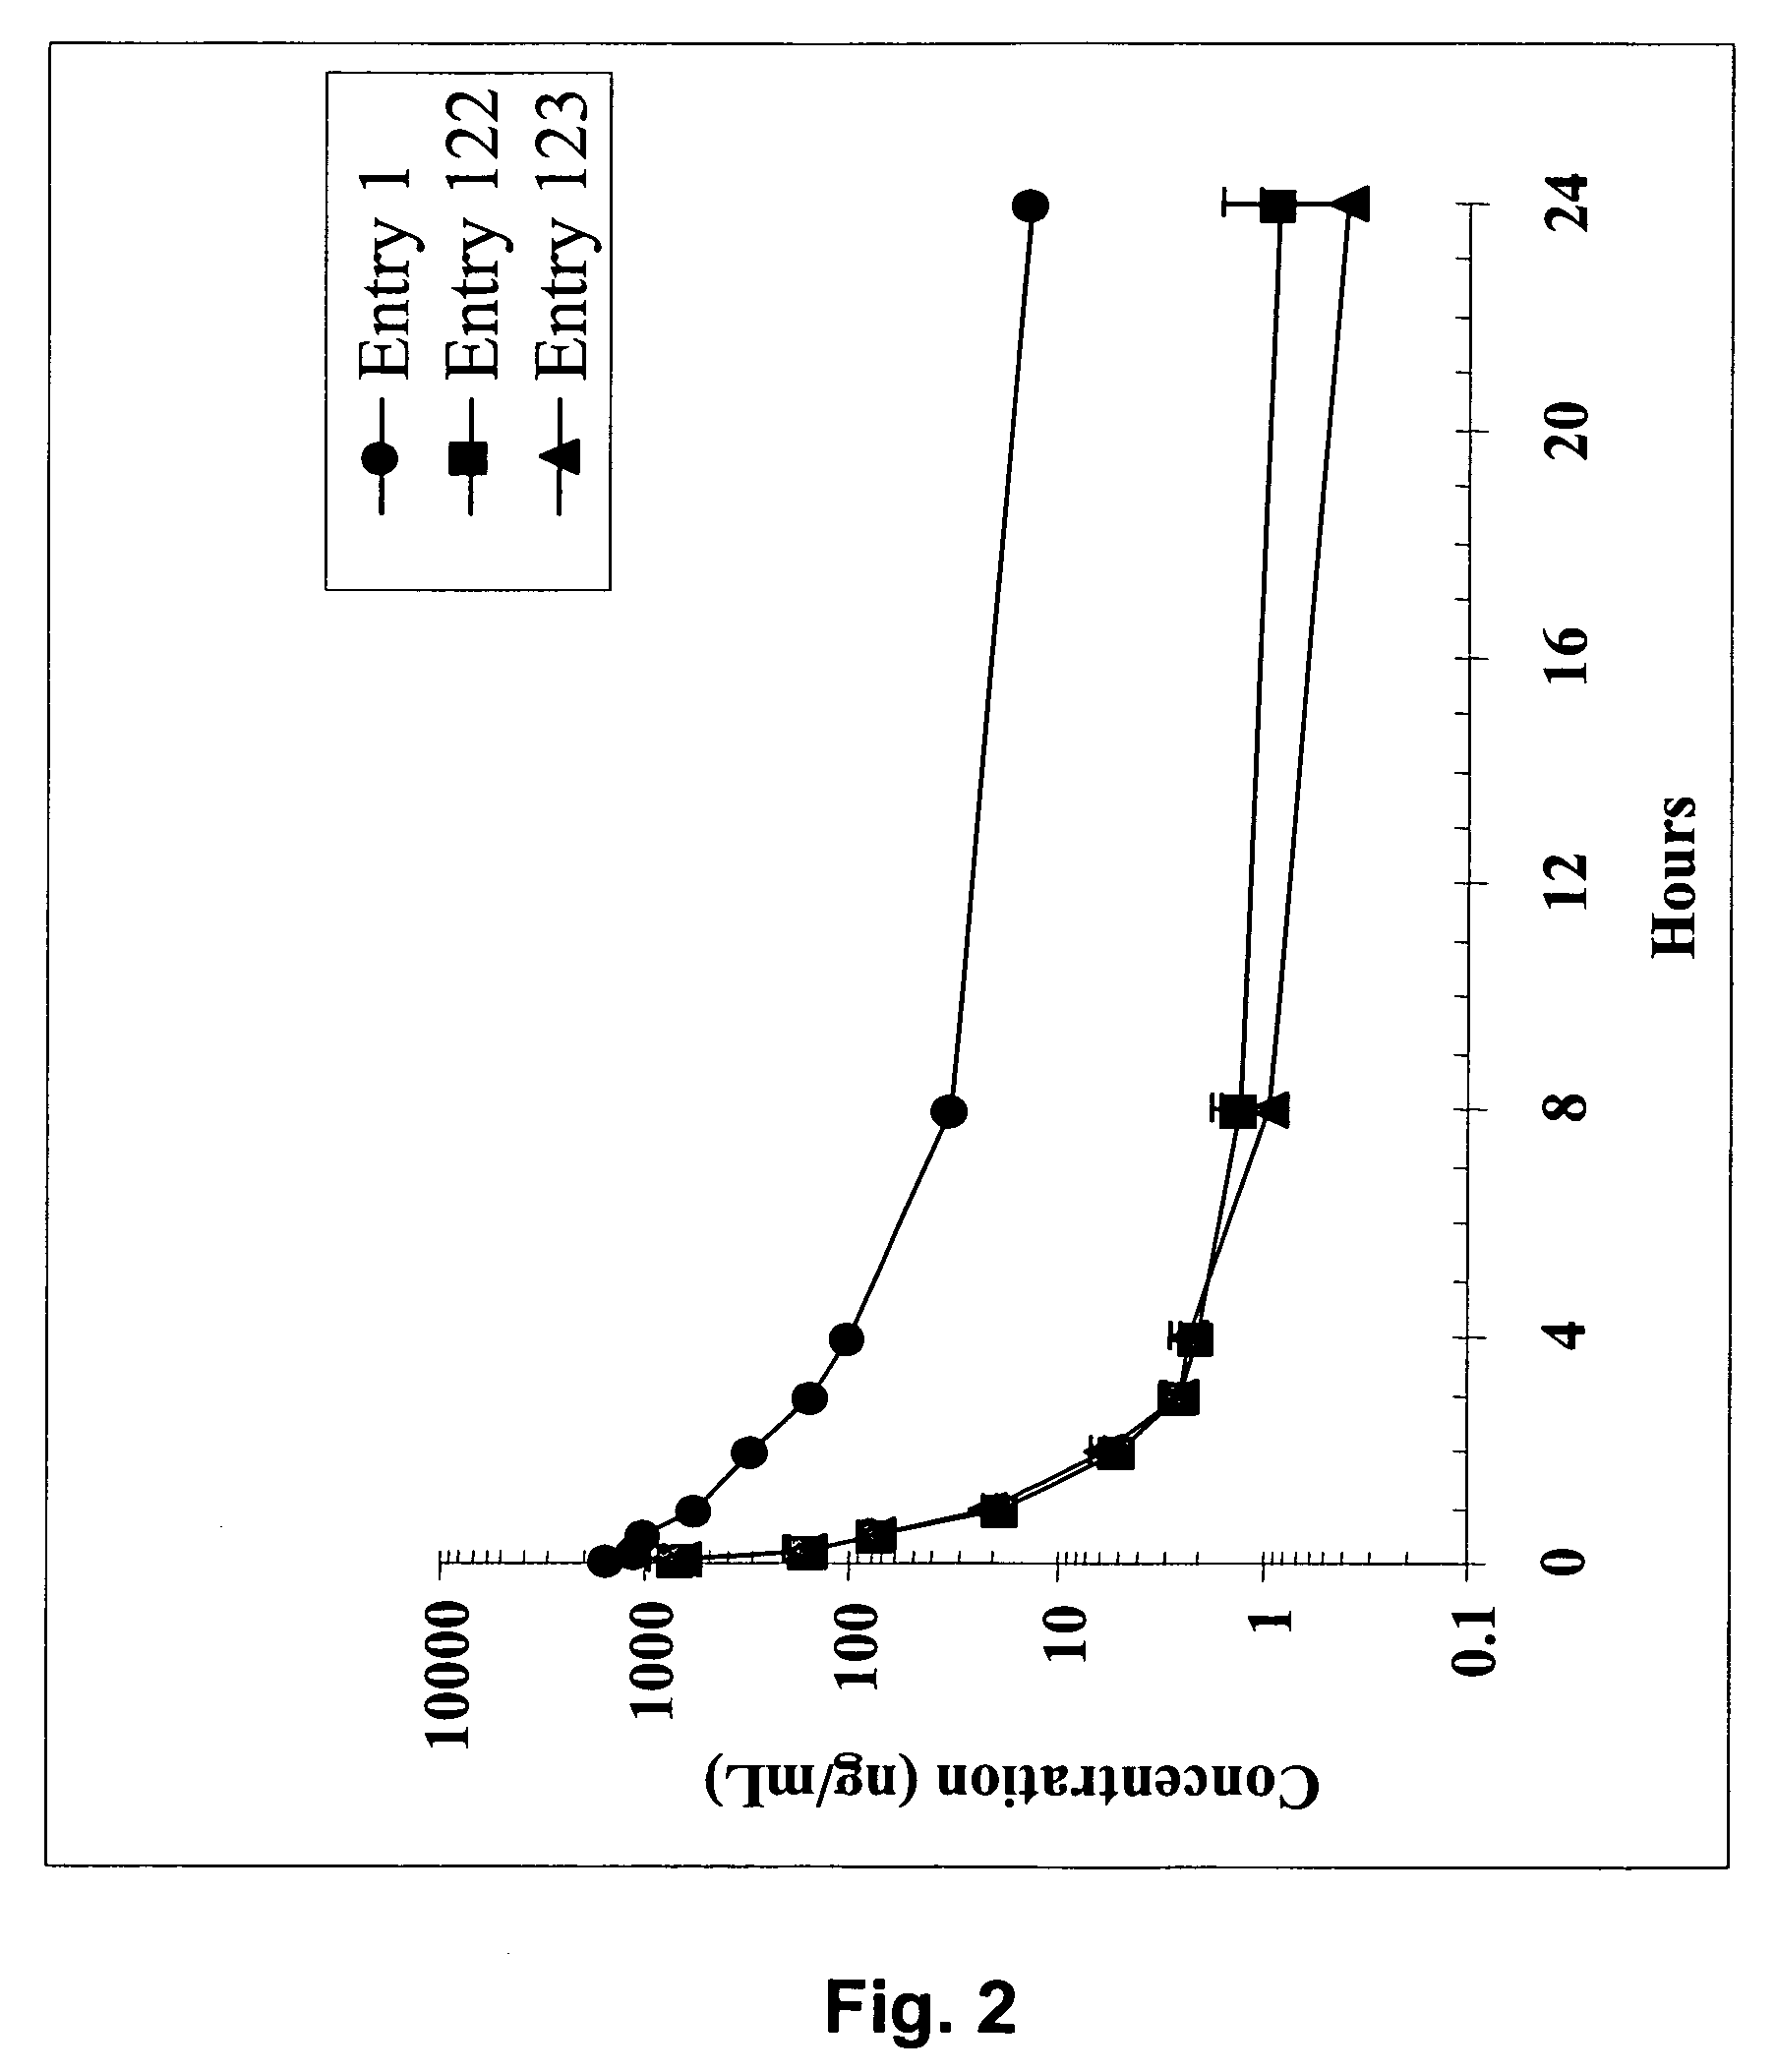 Dimeric IAP inhibitors